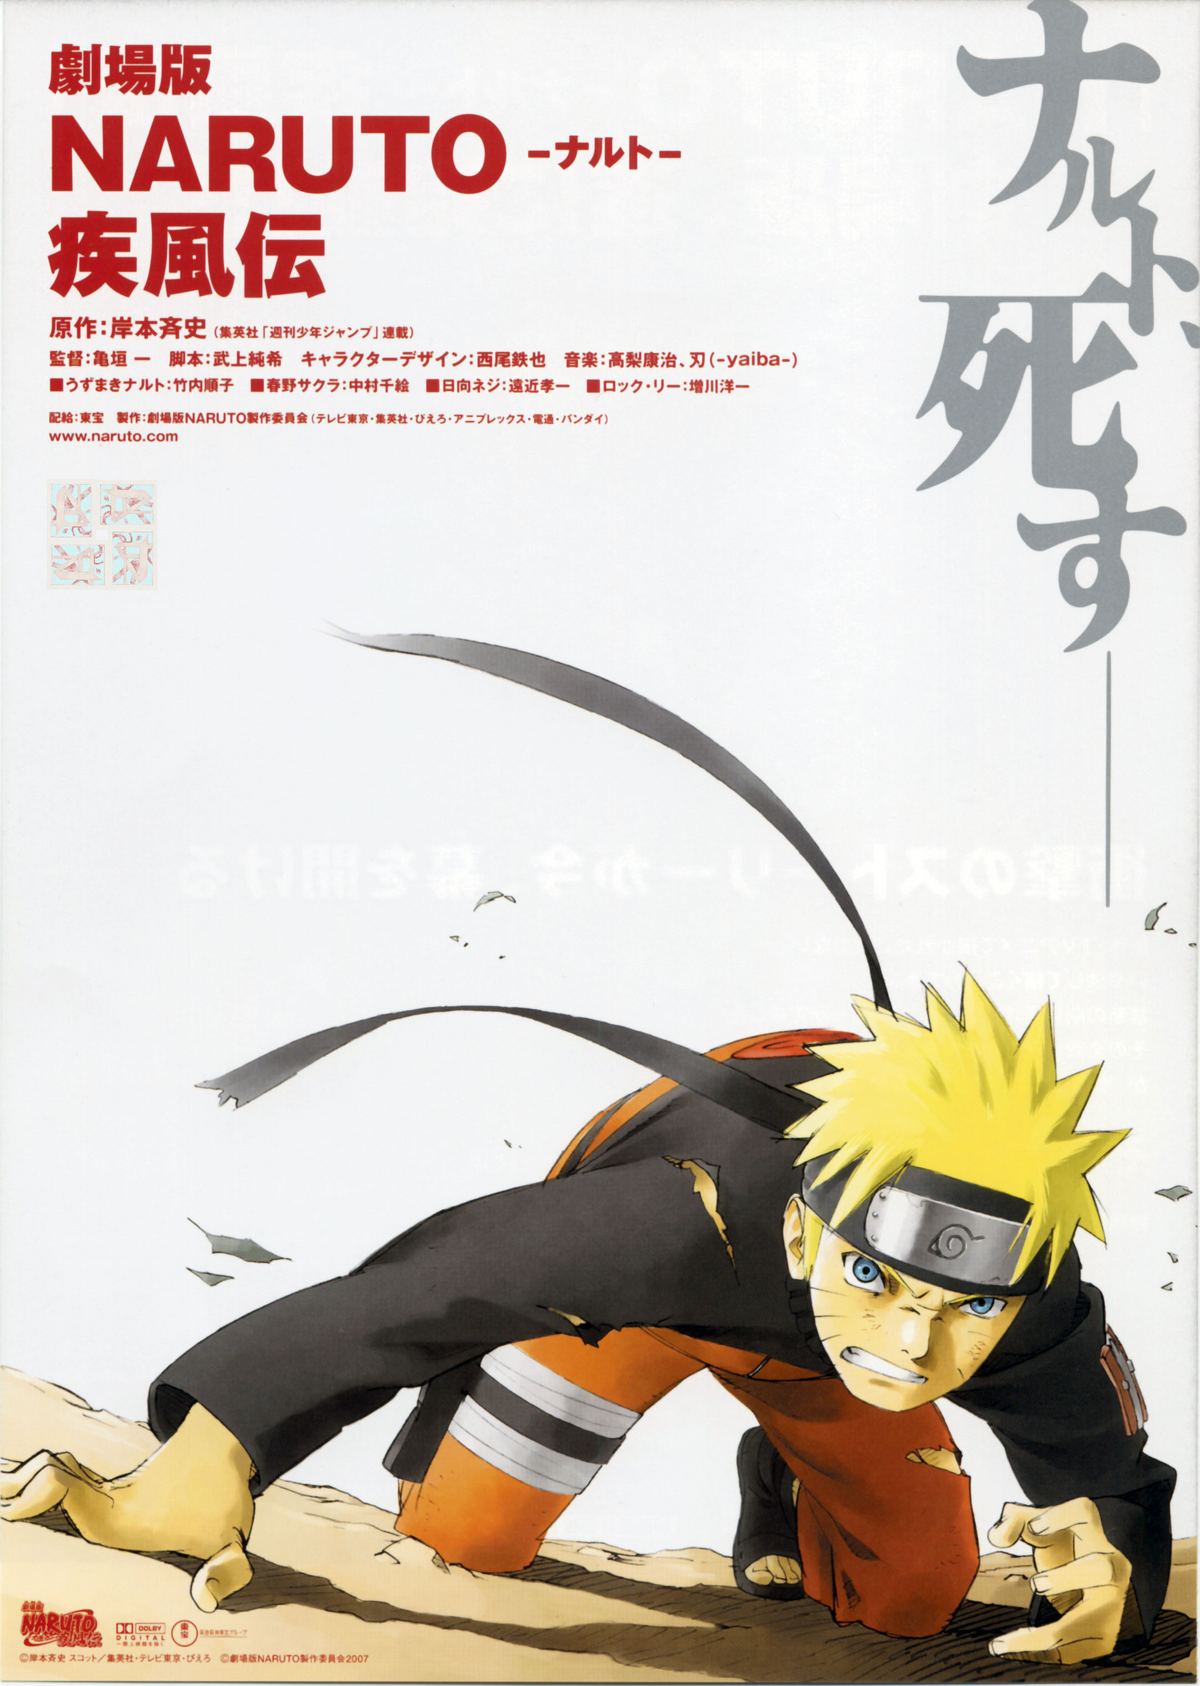 Where to Watch Road to Ninja? (Dub) : r/Naruto